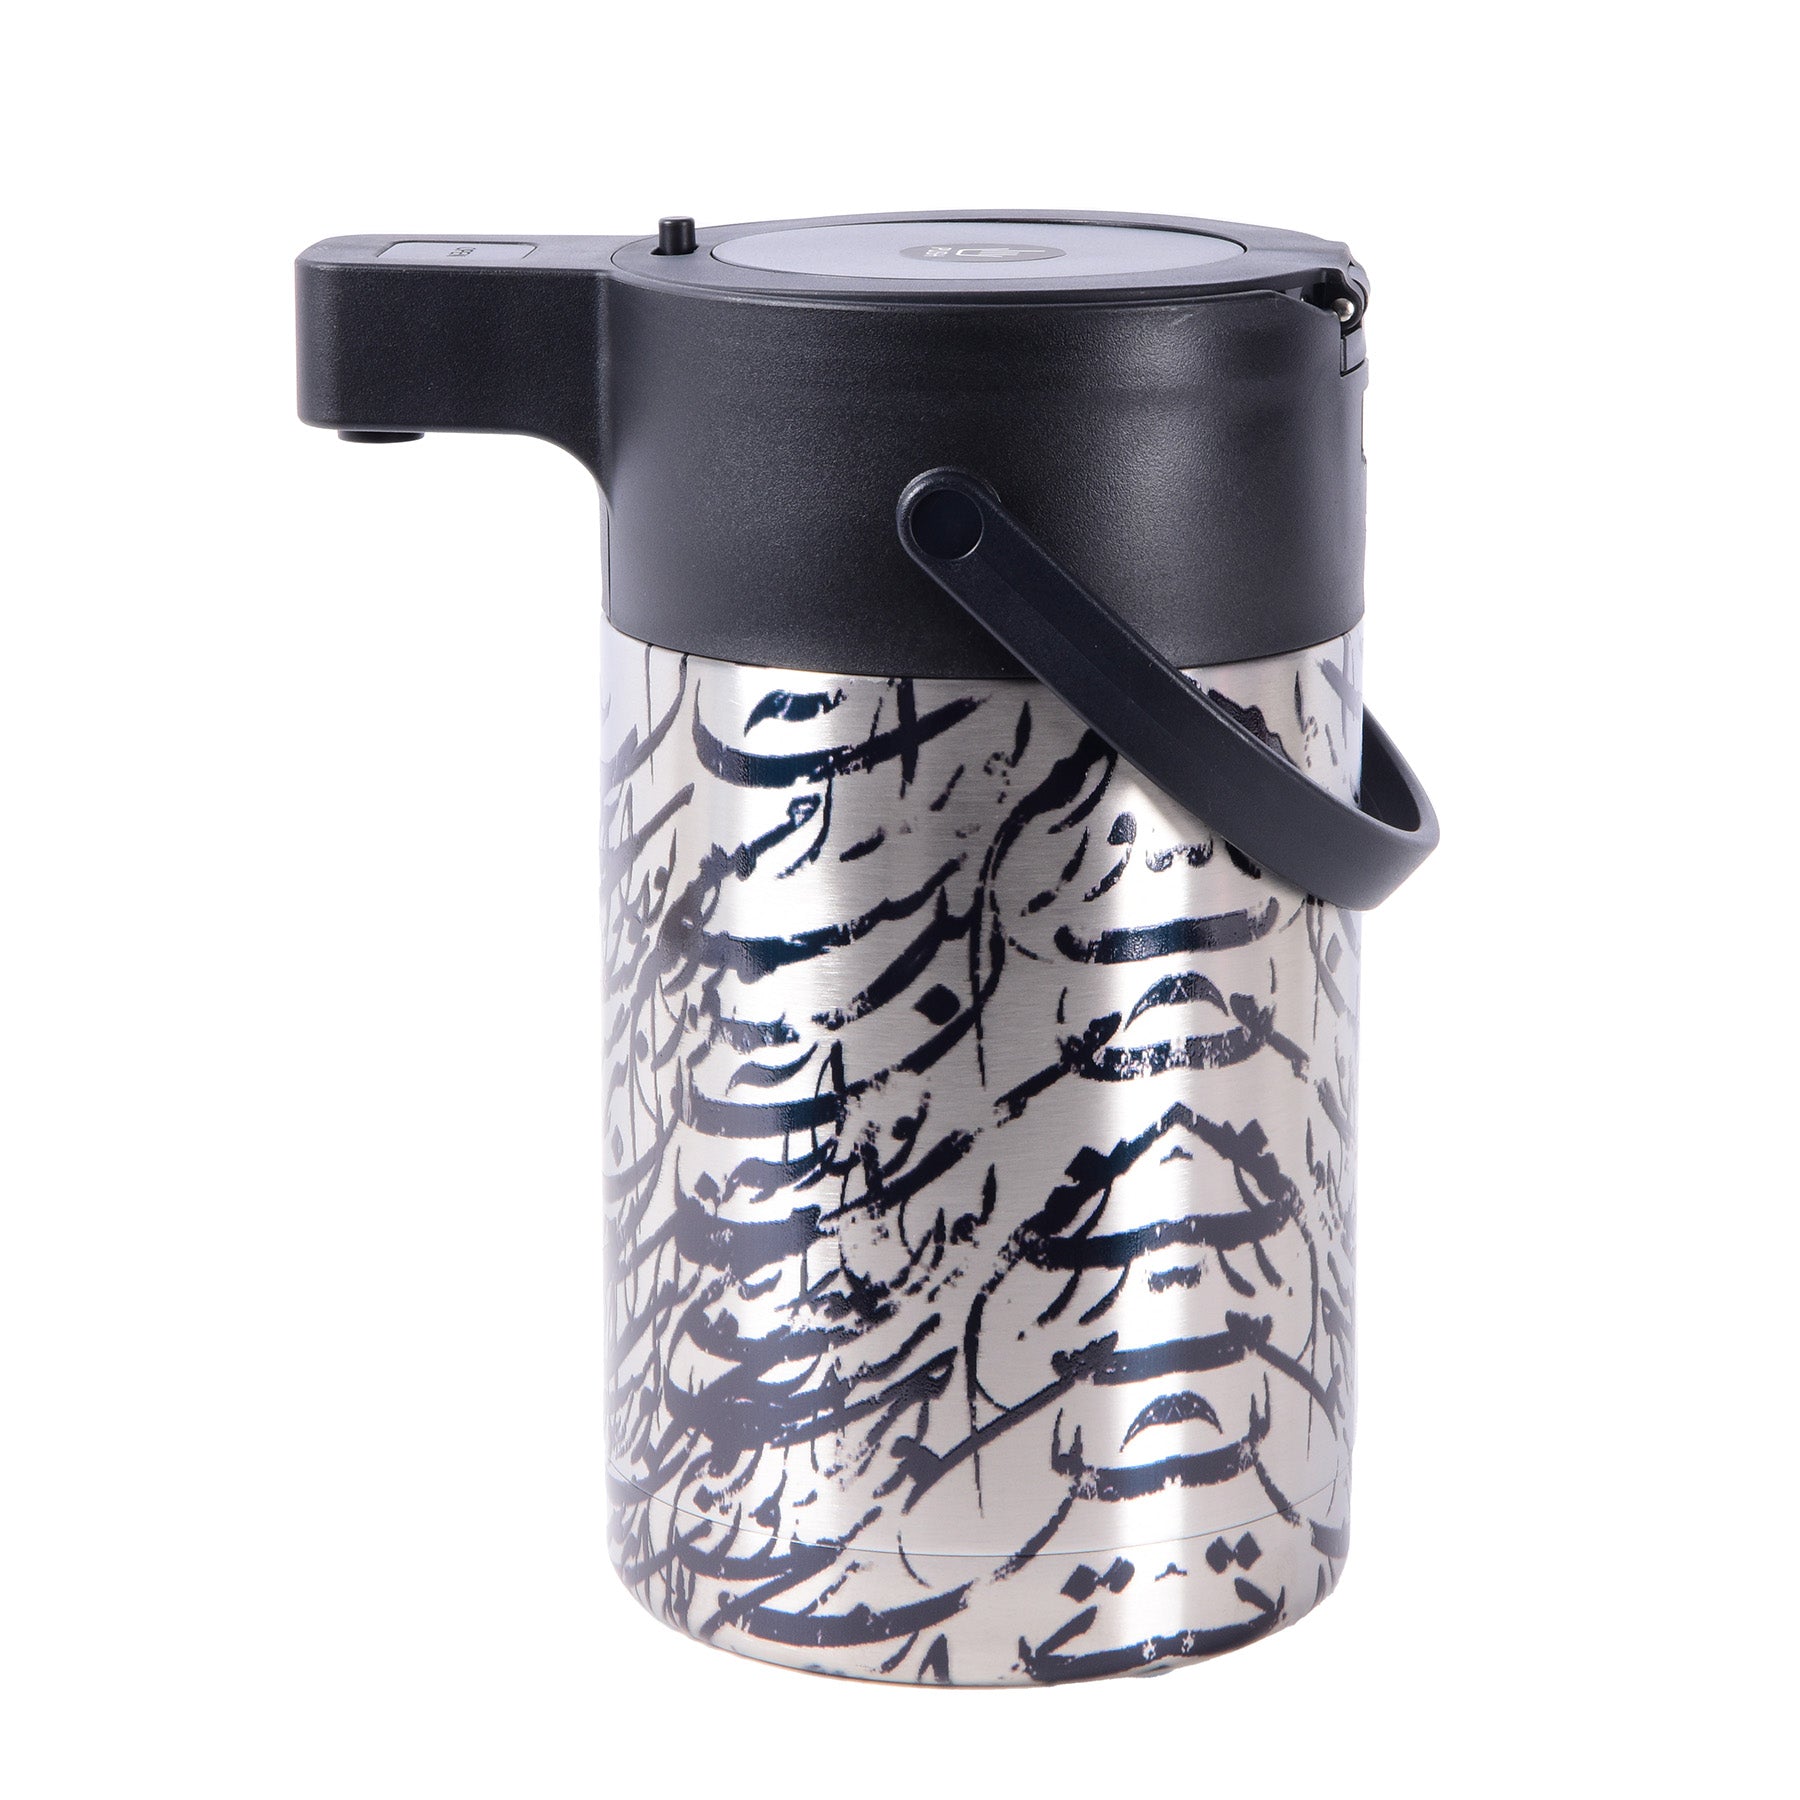 Zwarah Air Pot Flask 2.5 liters Silver Color